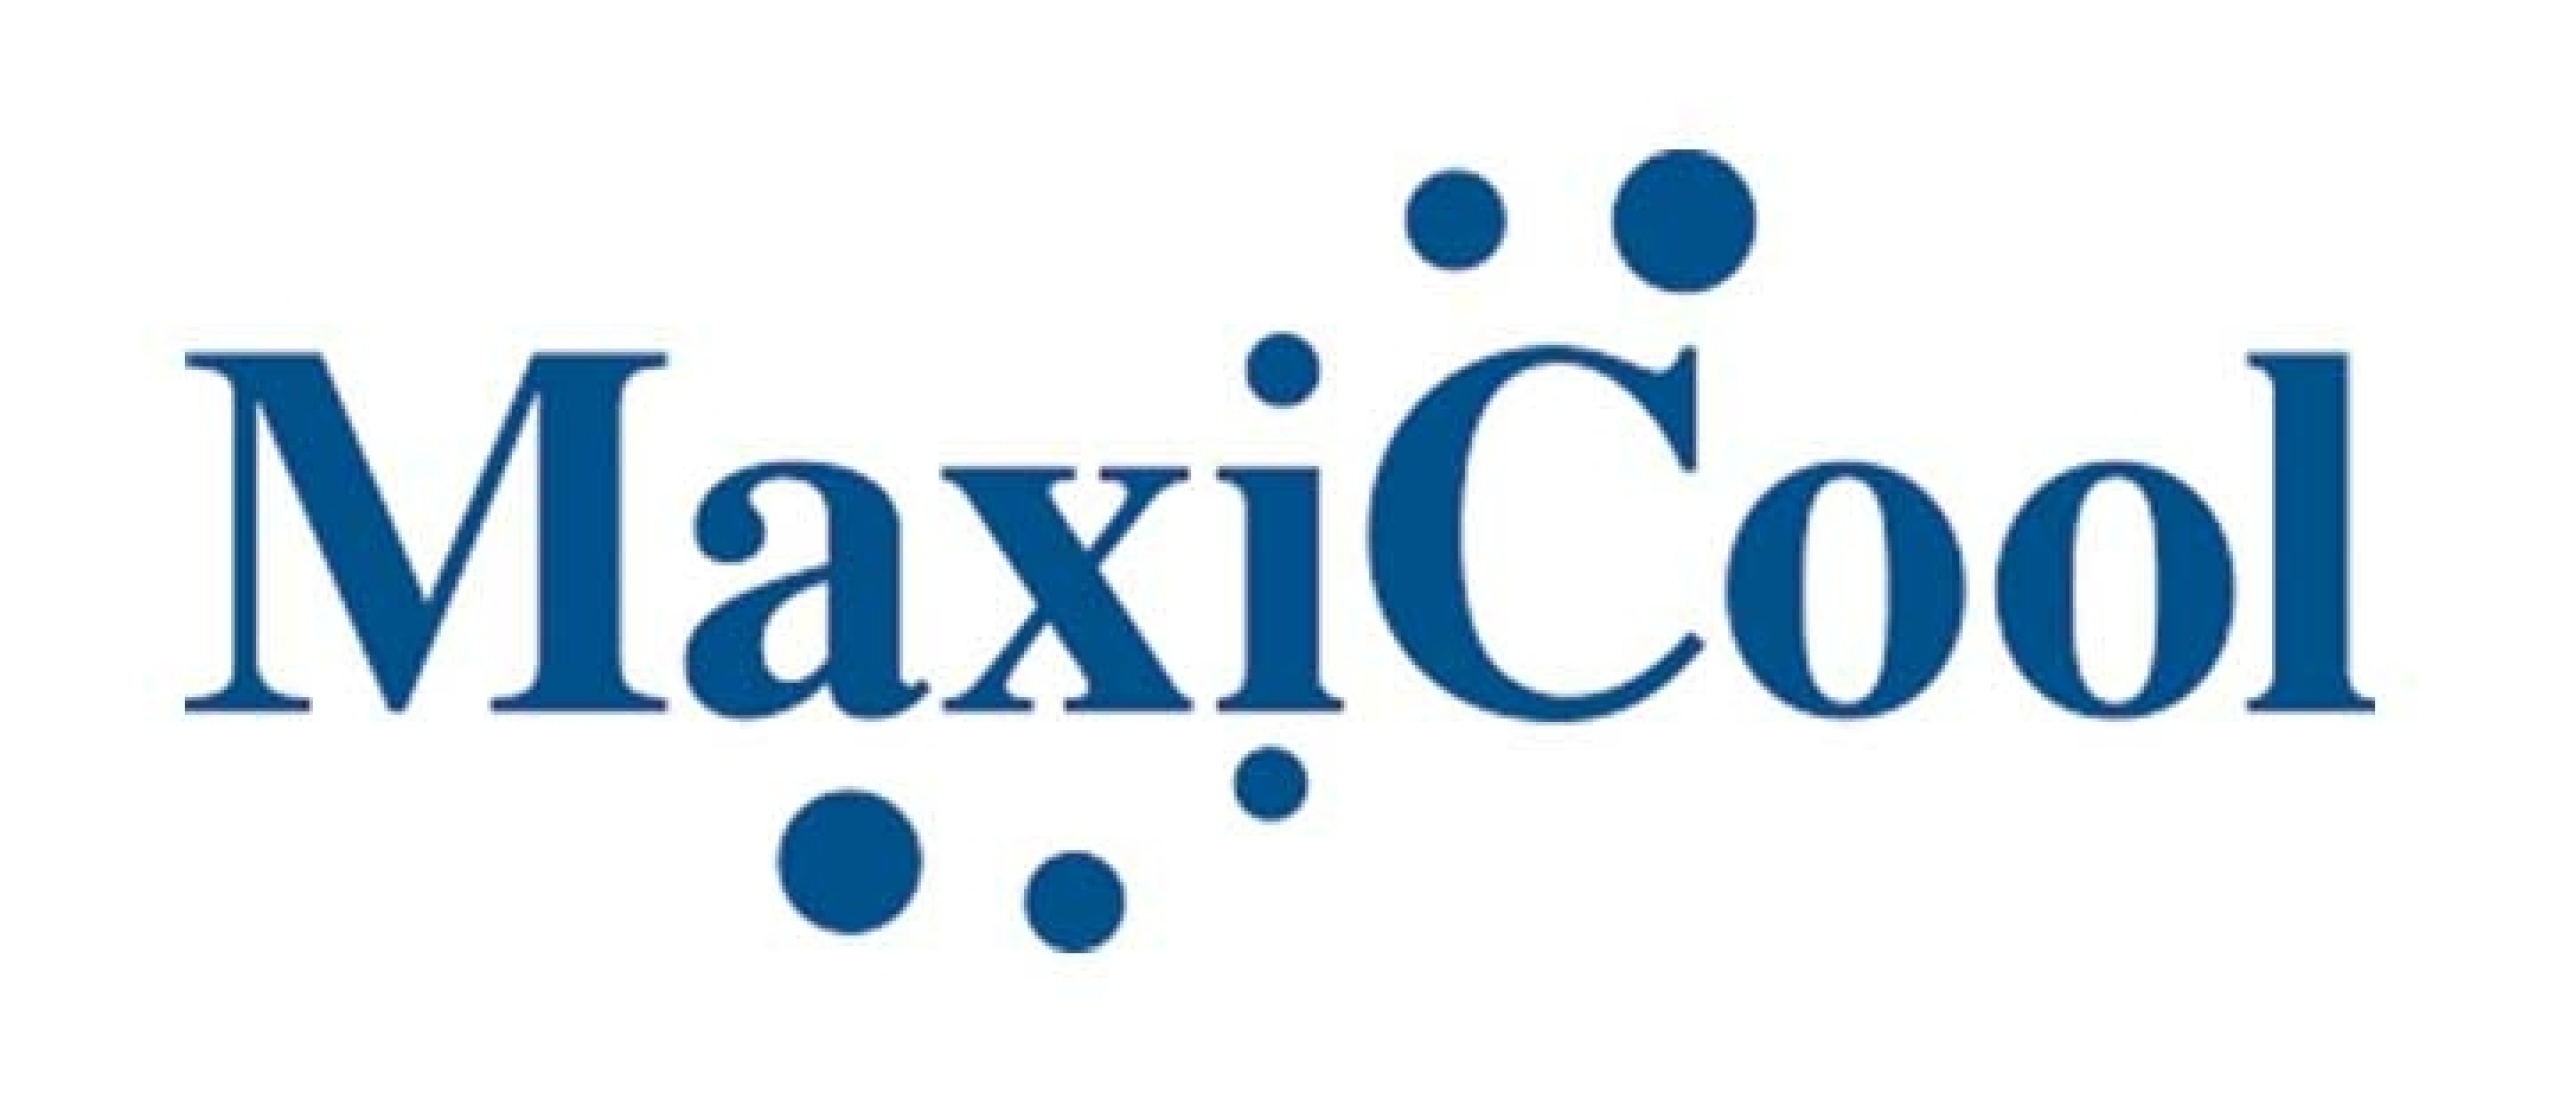 maxicool-logo